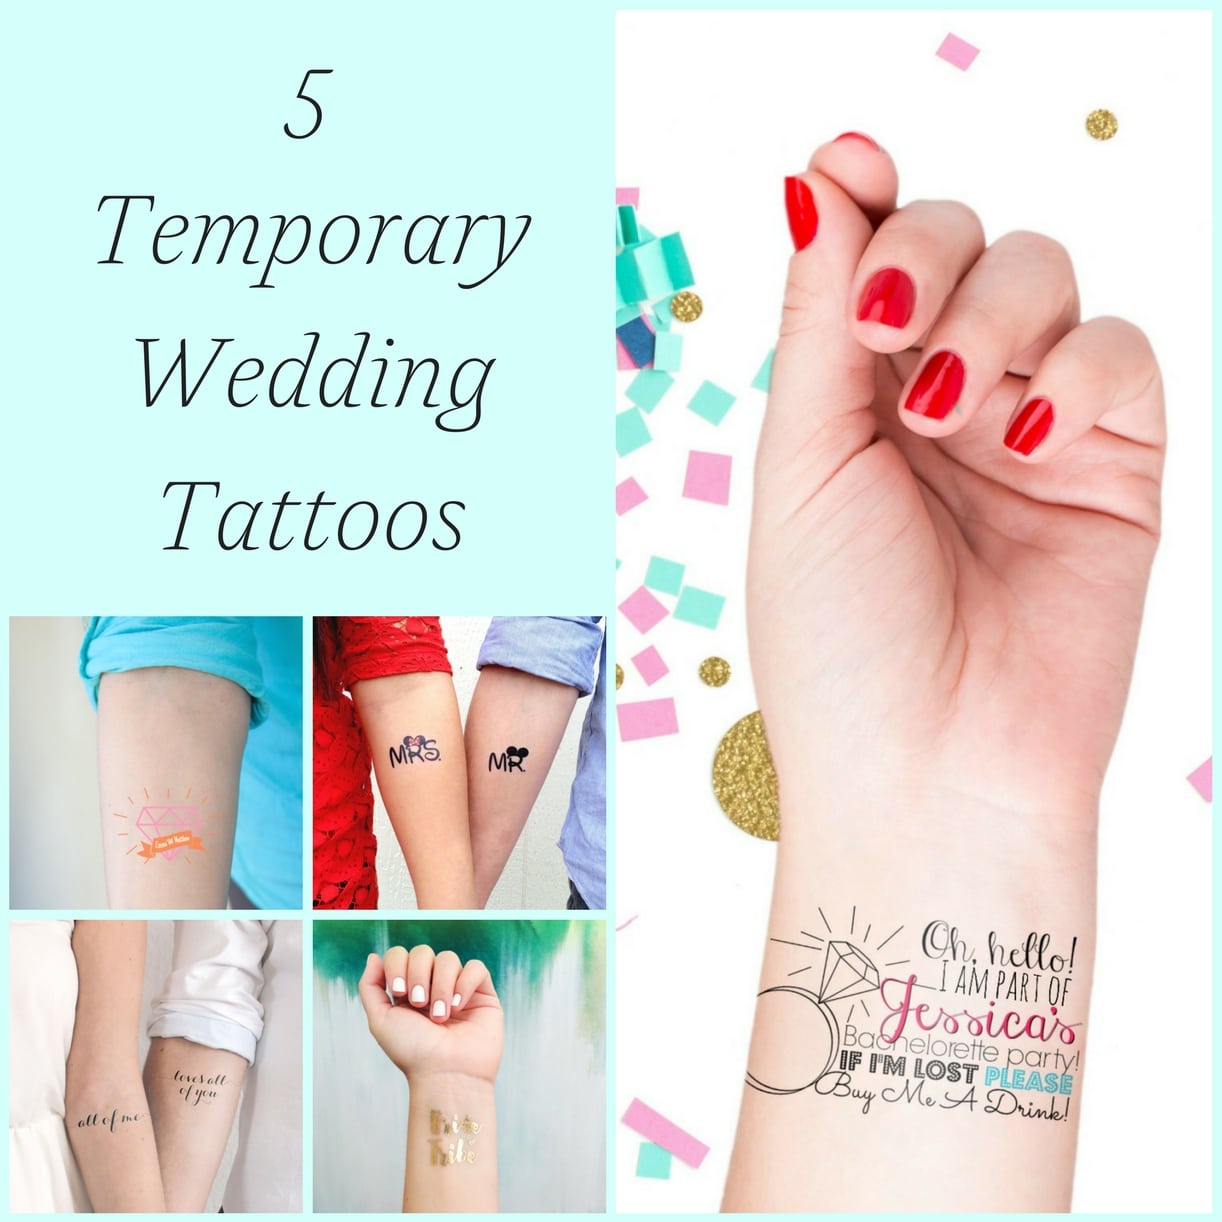 5 Temporary Wedding Tattoos as seen on Hill City Bride